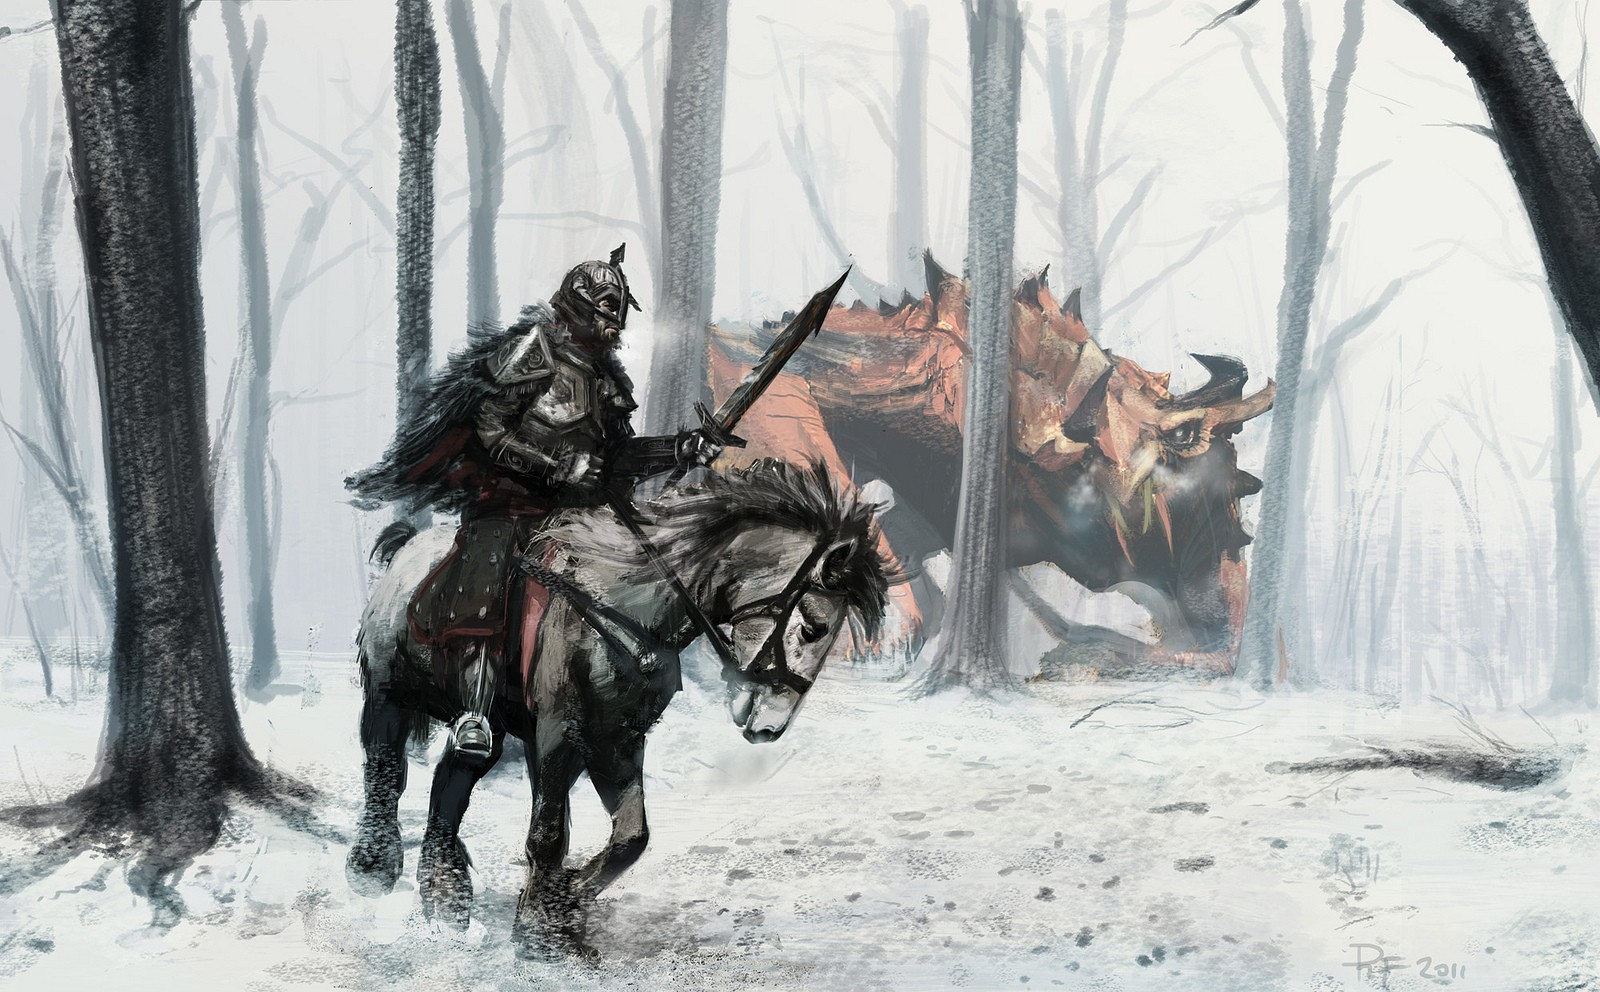 General 1600x992 forest dragon The Elder Scrolls V: Skyrim video games PC gaming fantasy art creature sword armor video game art